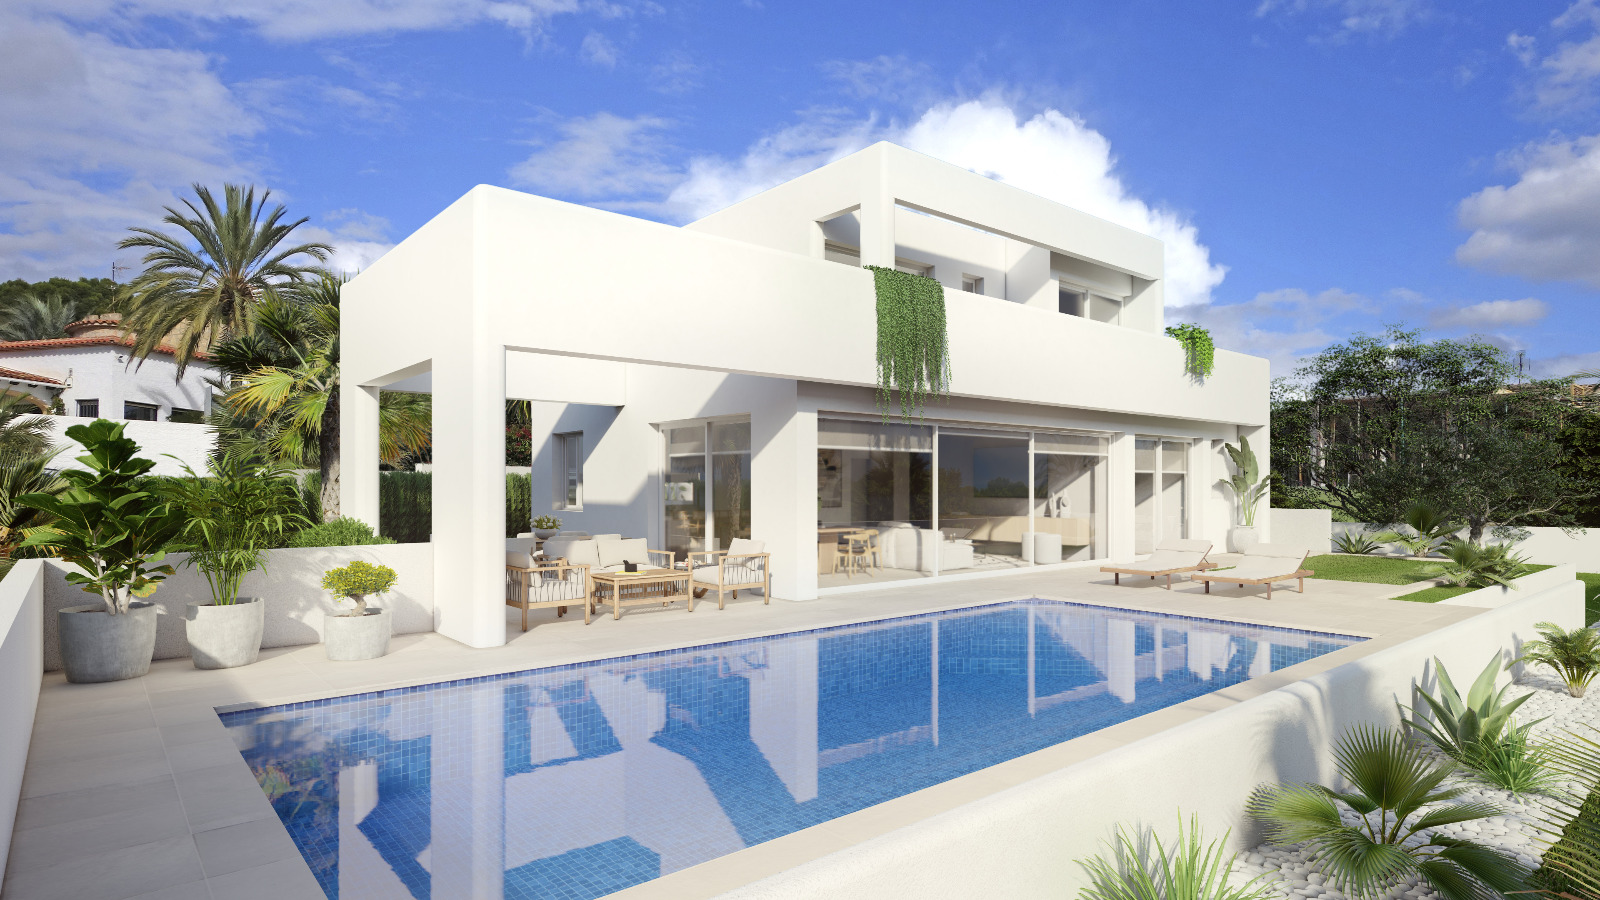 Villa moderna con vista al mar en venta en Baladrar, Benissa